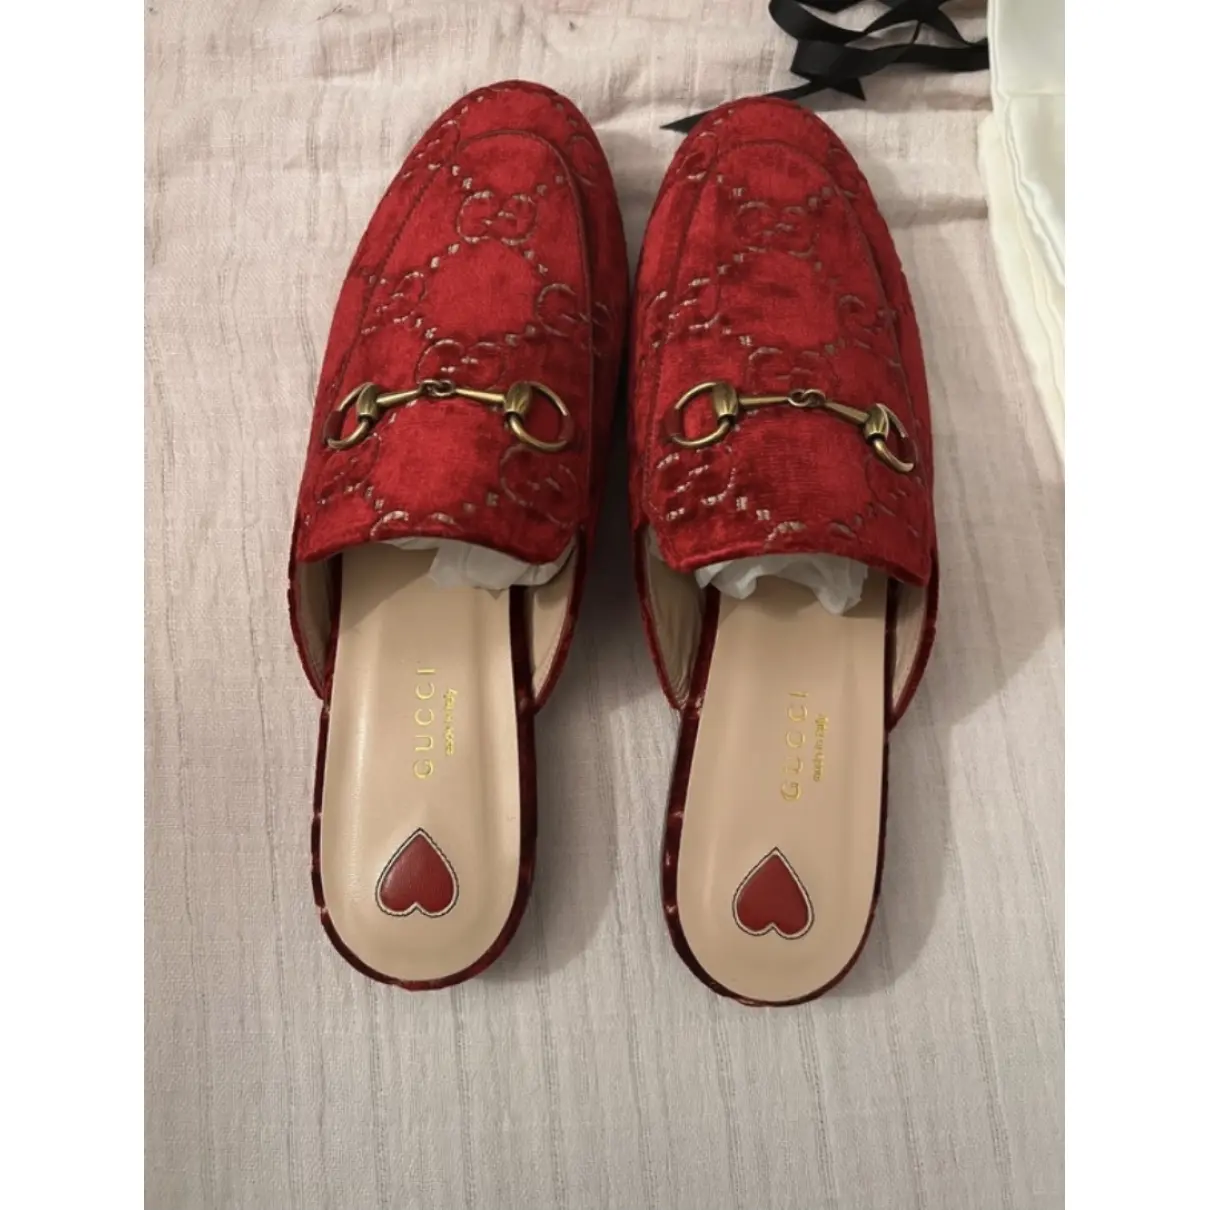 Buy Gucci Princetown velvet sandals online